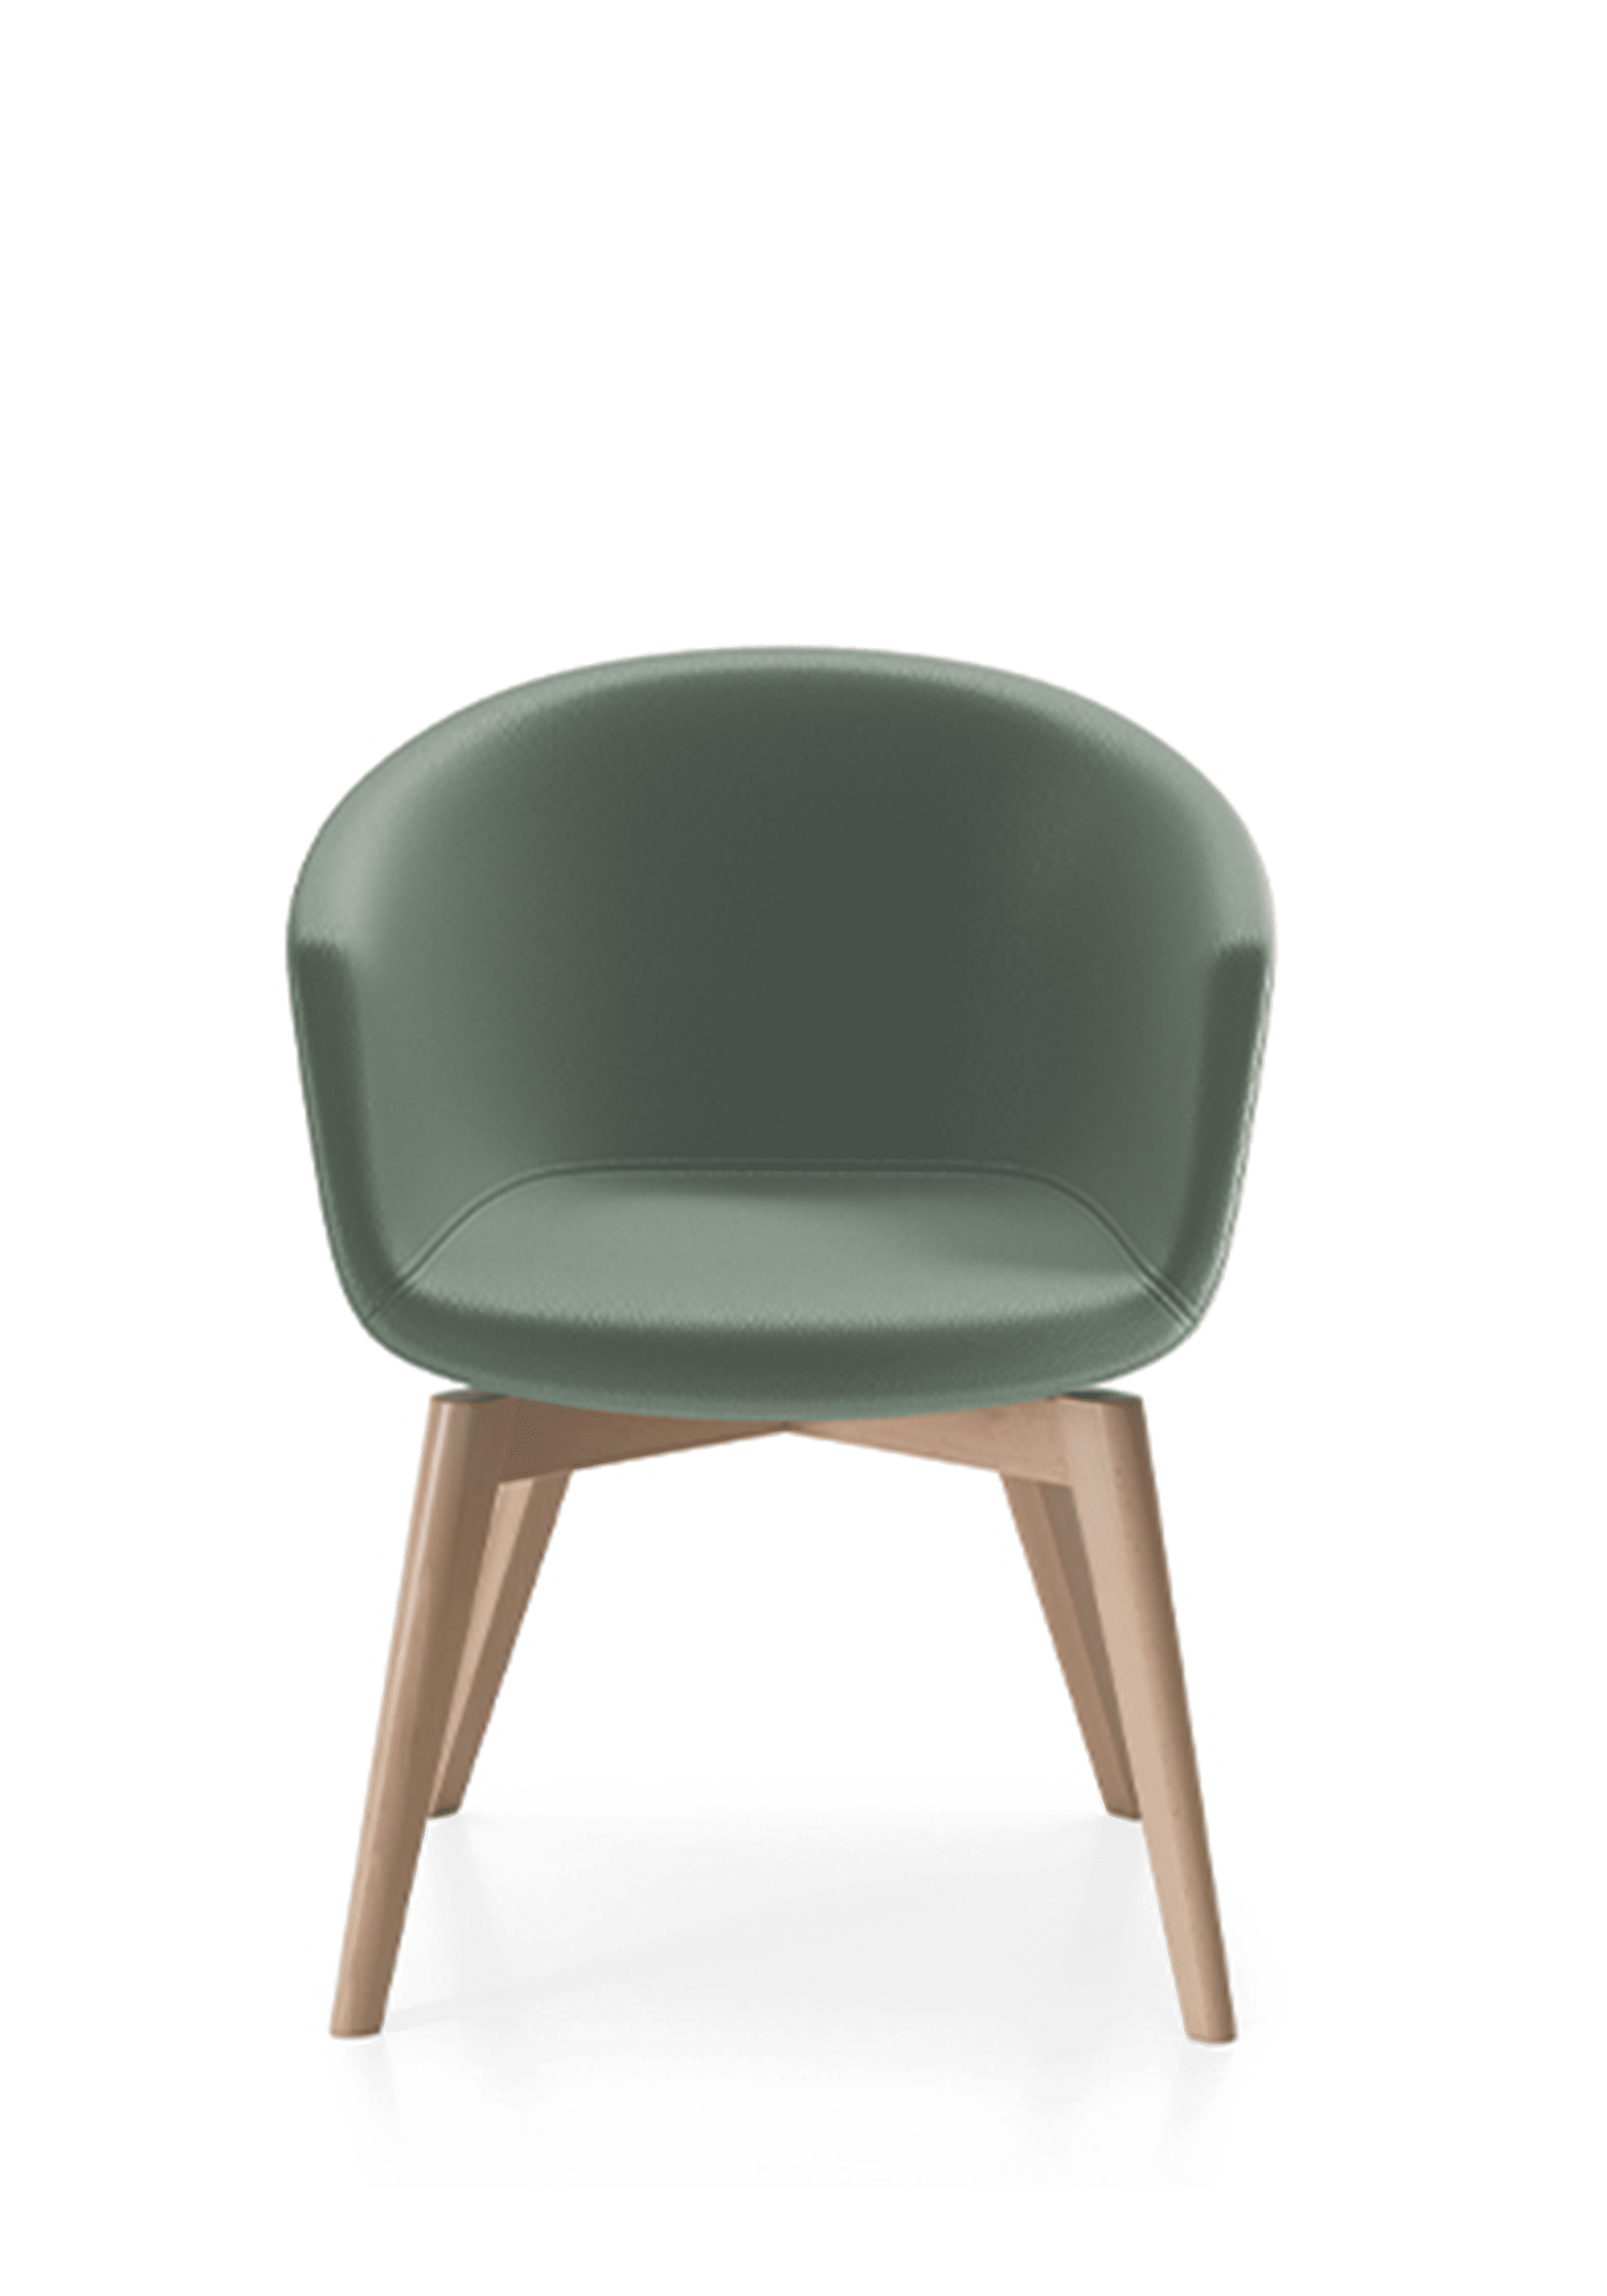 CH Jolly Chair green timber base Supplier